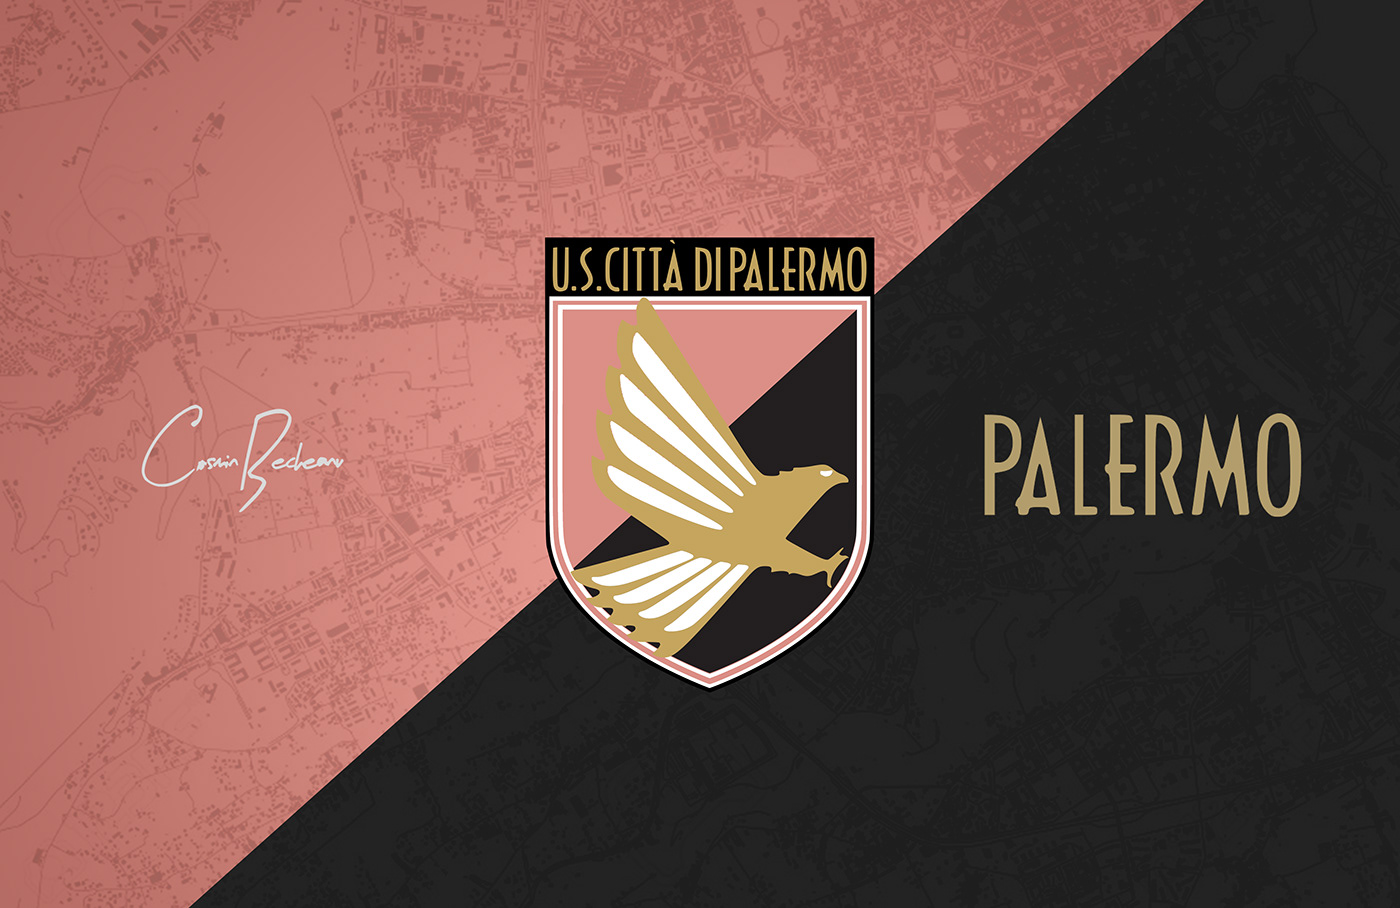 File:Palermo FC 2010.jpg - Wikimedia Commons